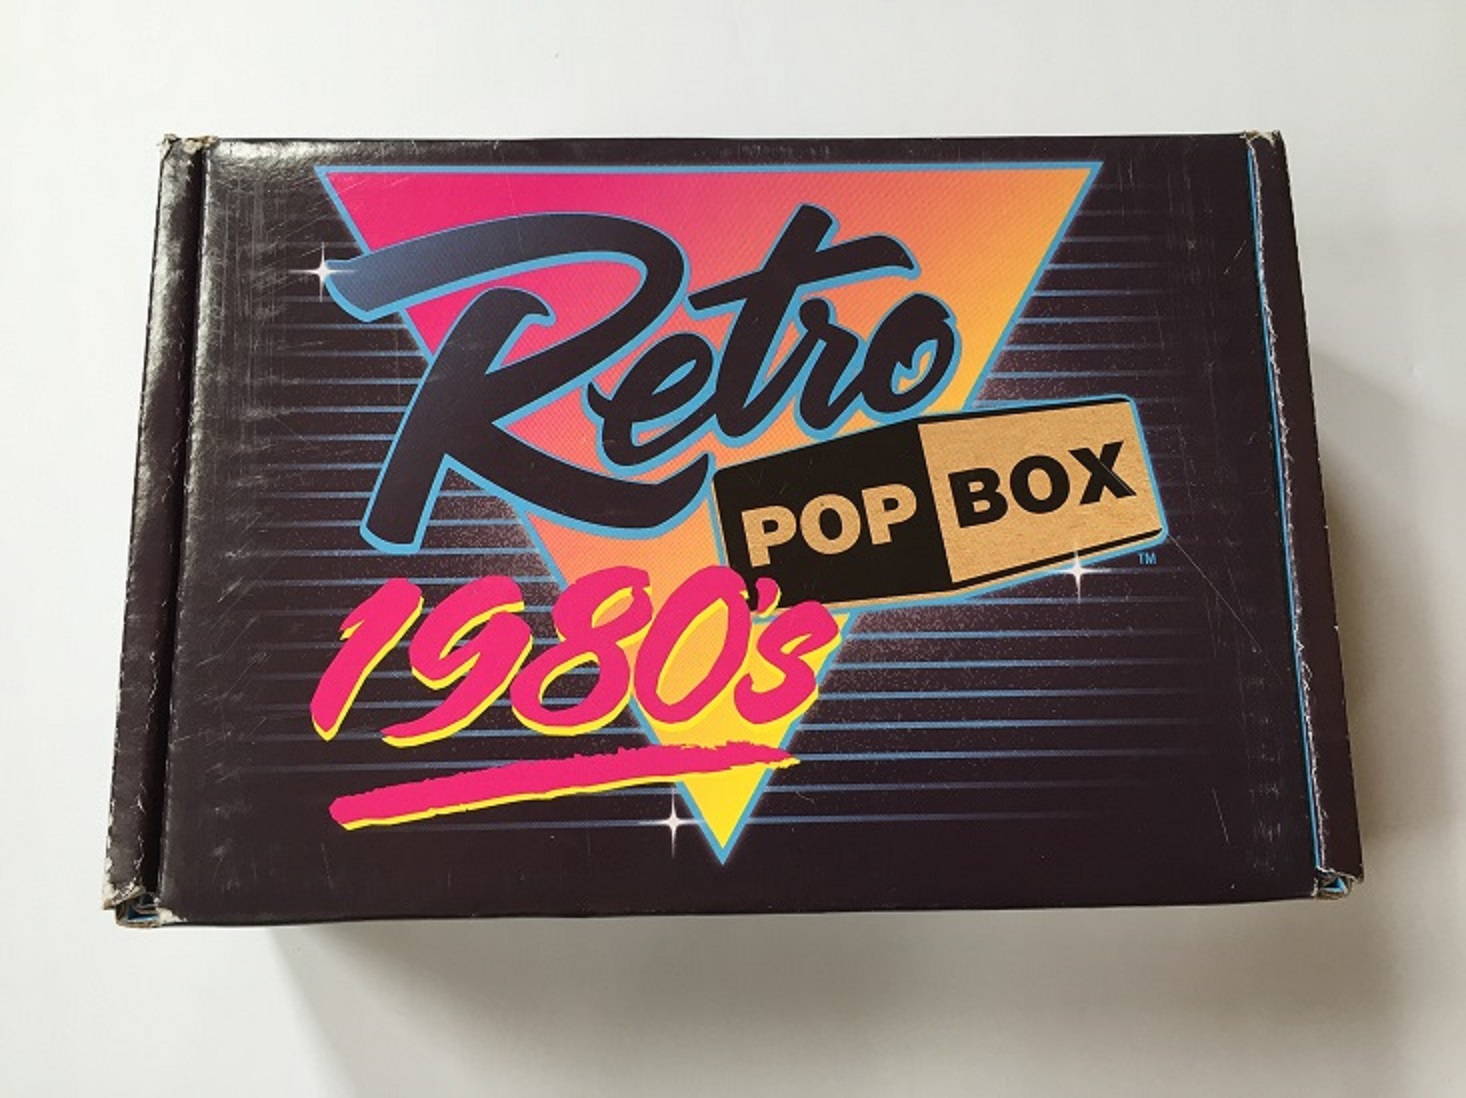 80s Retro Pop Box Subscription Review + Coupon- November 2016